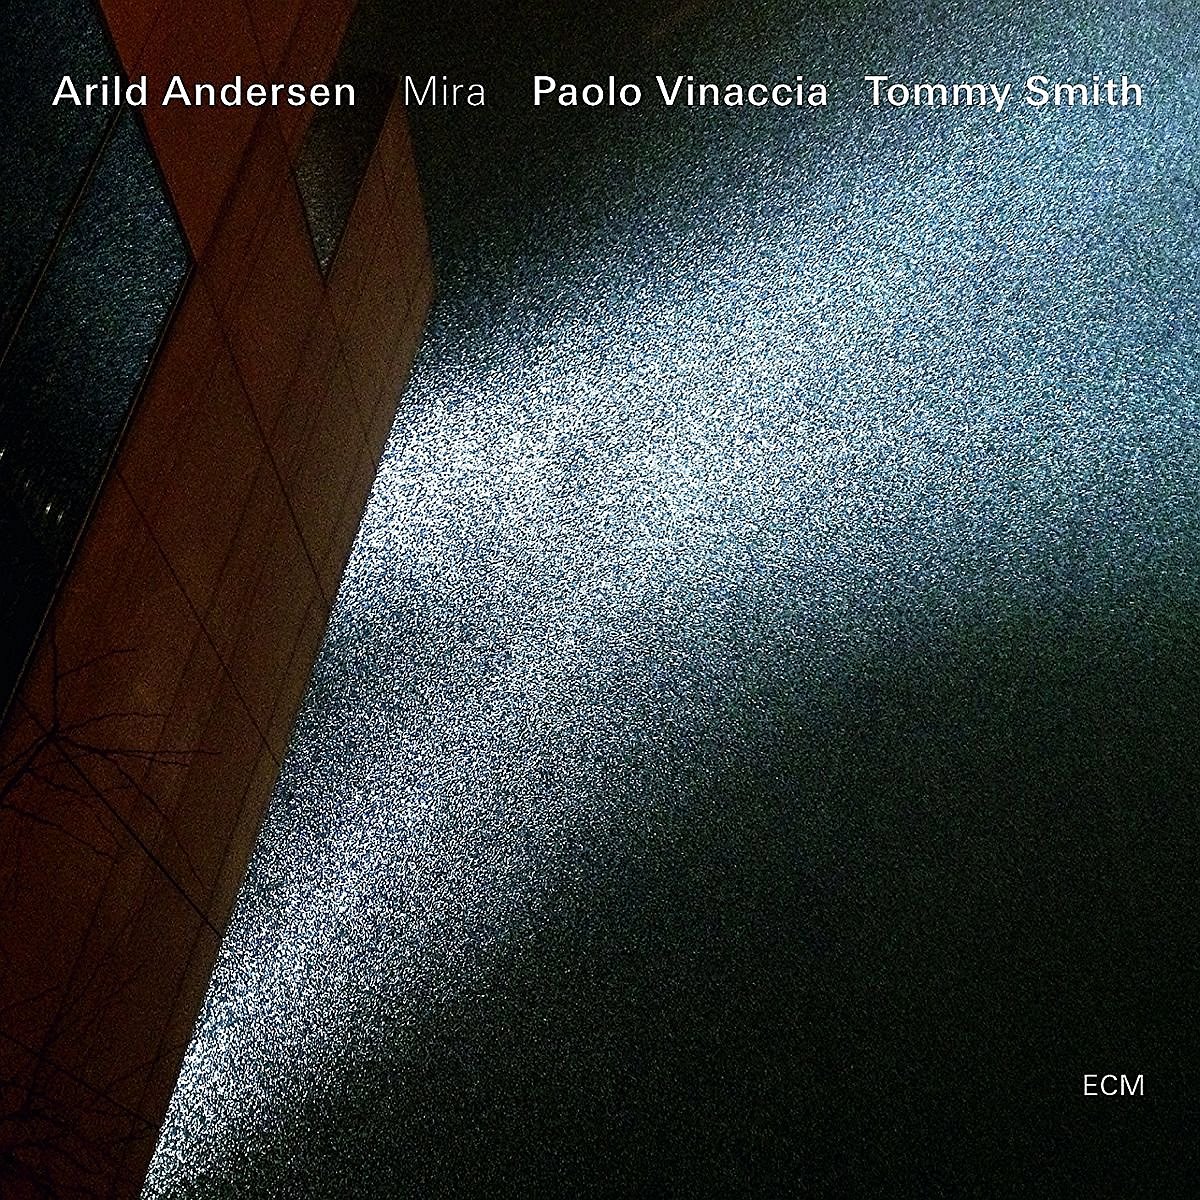 Arild Andersen, Tommy Smith, Paolo Vinaccia - Mira (2013) [AcousticSounds FLAC 24bit/96kHz]